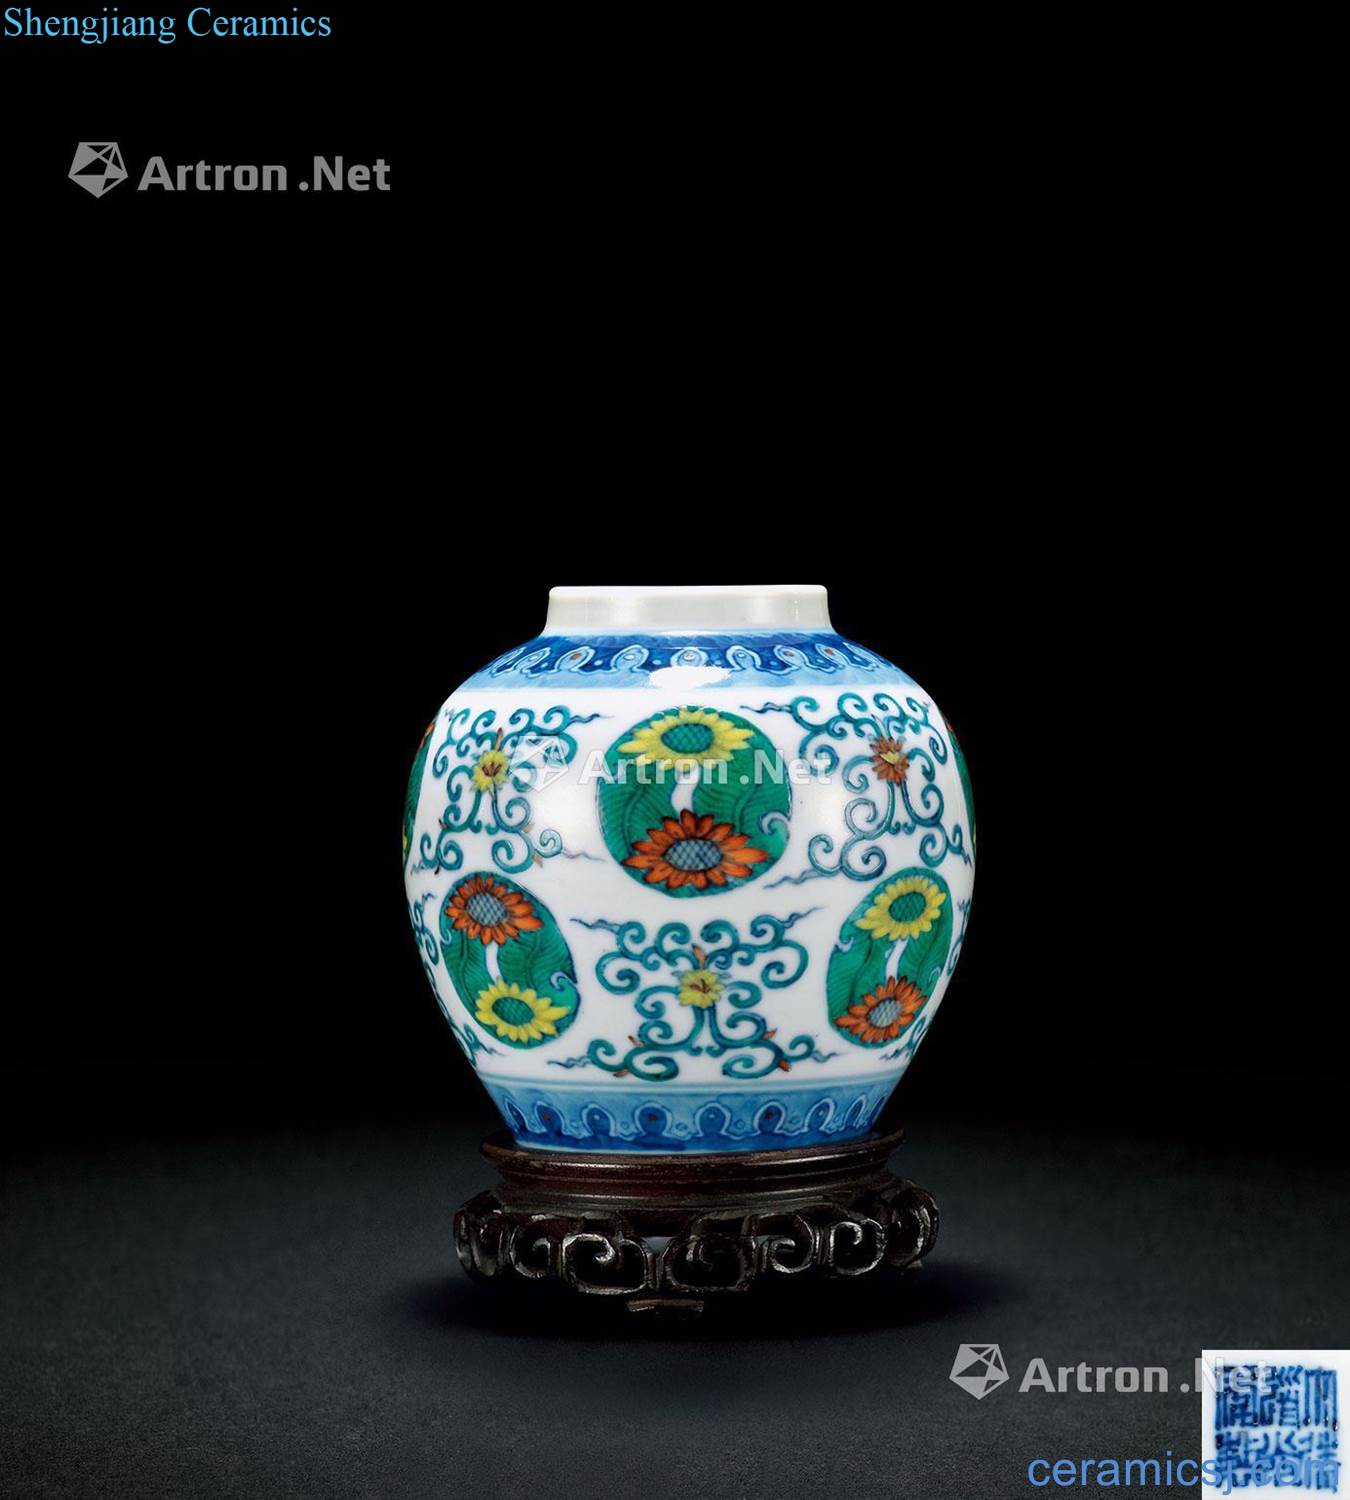 Qing daoguang bucket CaiTuan pattern cans